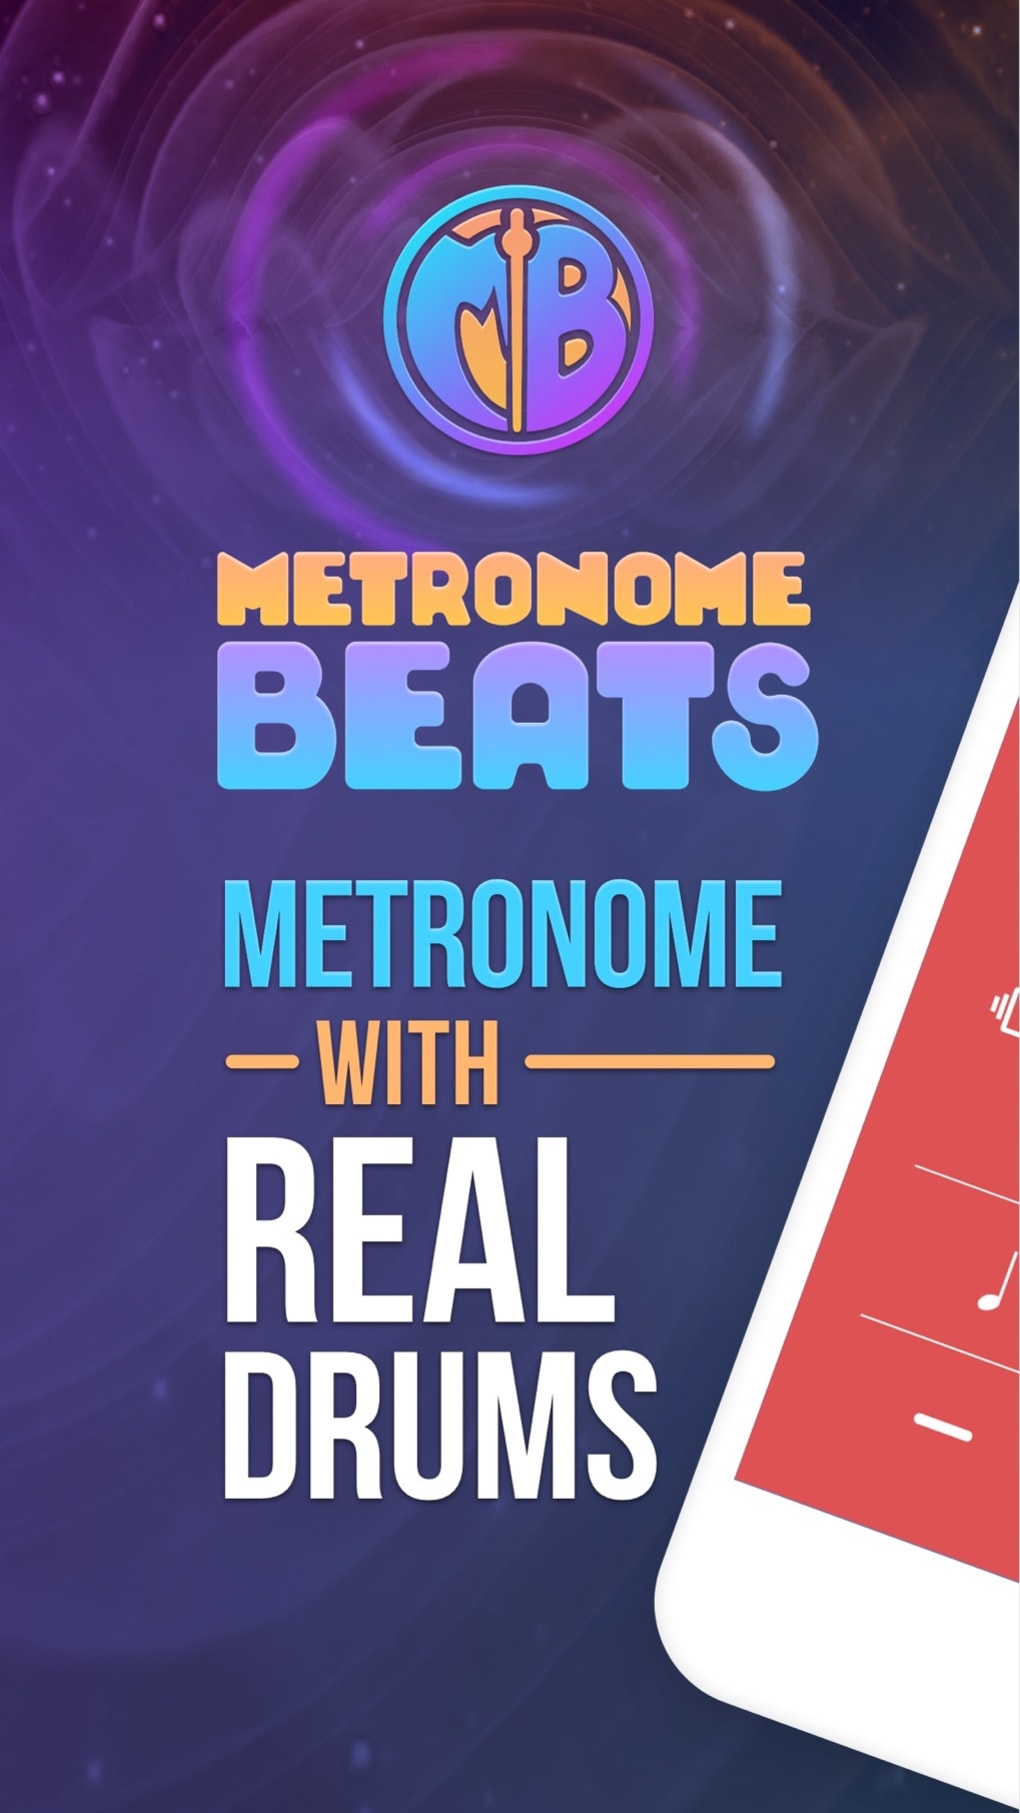 metronome 4 beats